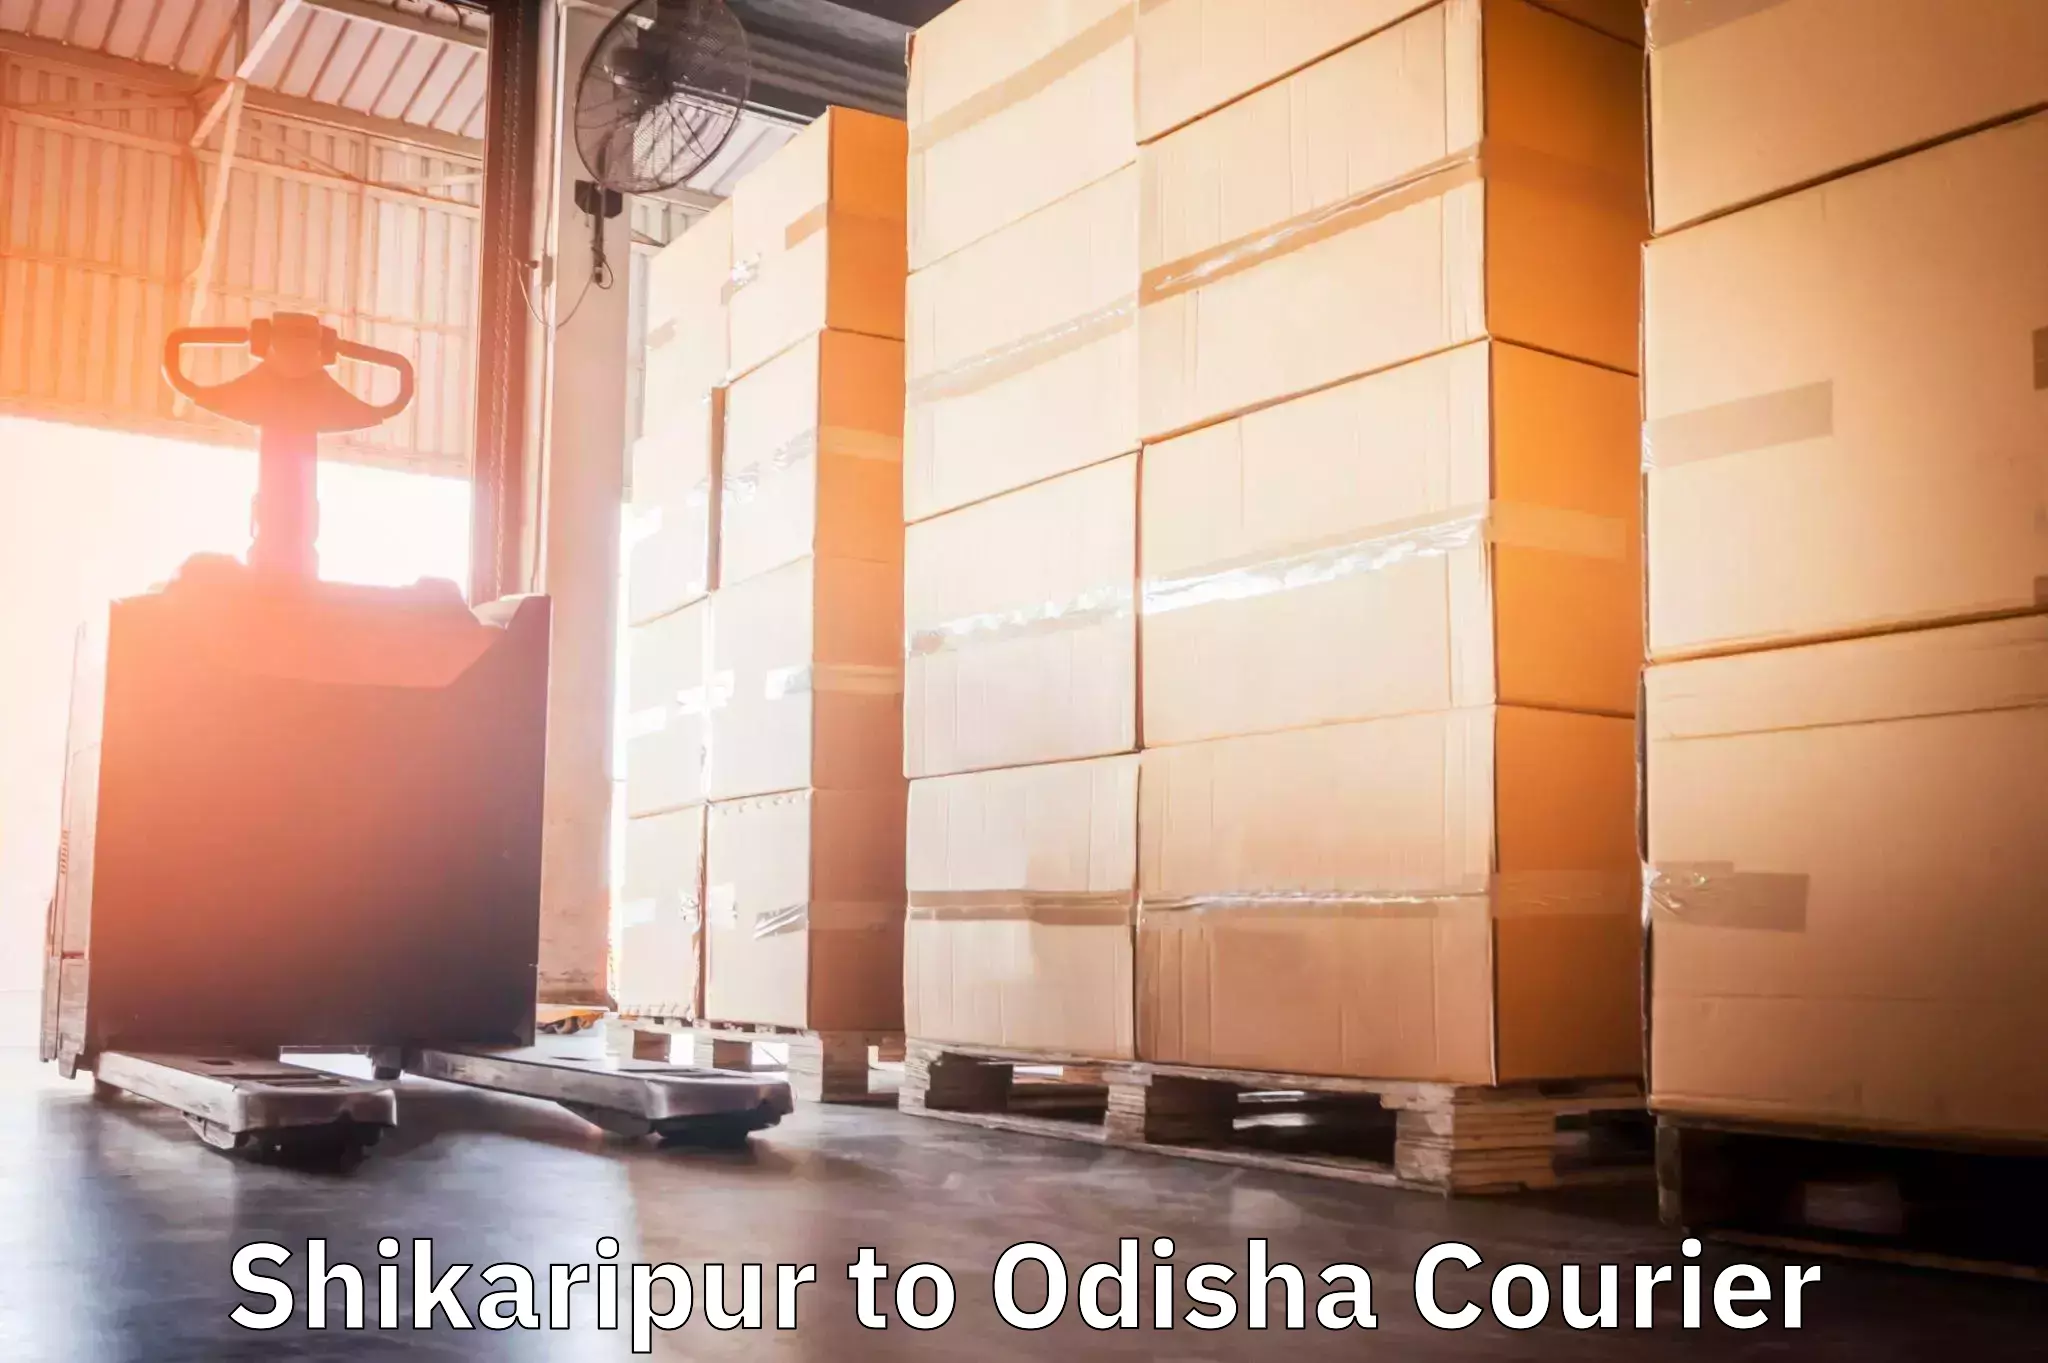 Courier service comparison Shikaripur to Odisha